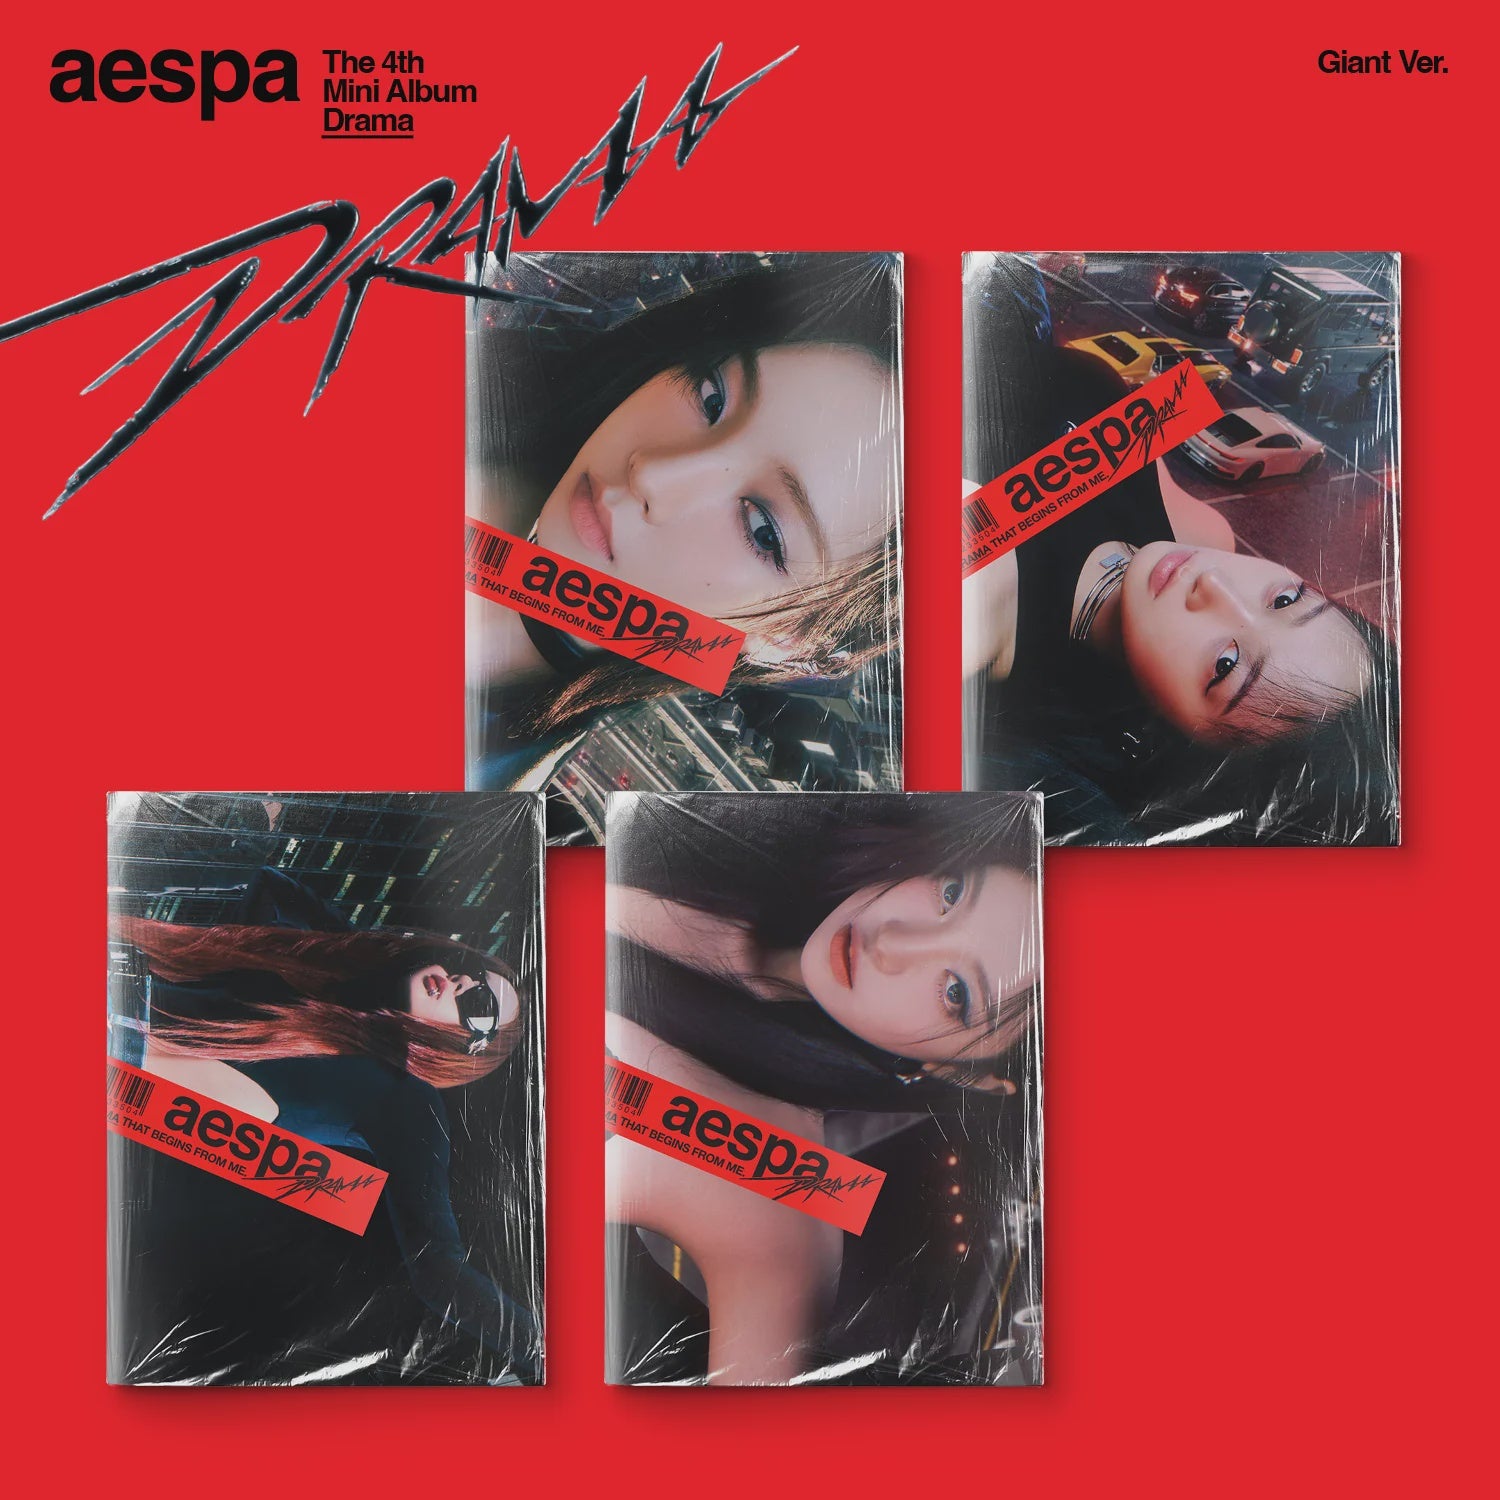 aespa 4th Mini Album "Drama" (GIANT Ver.)